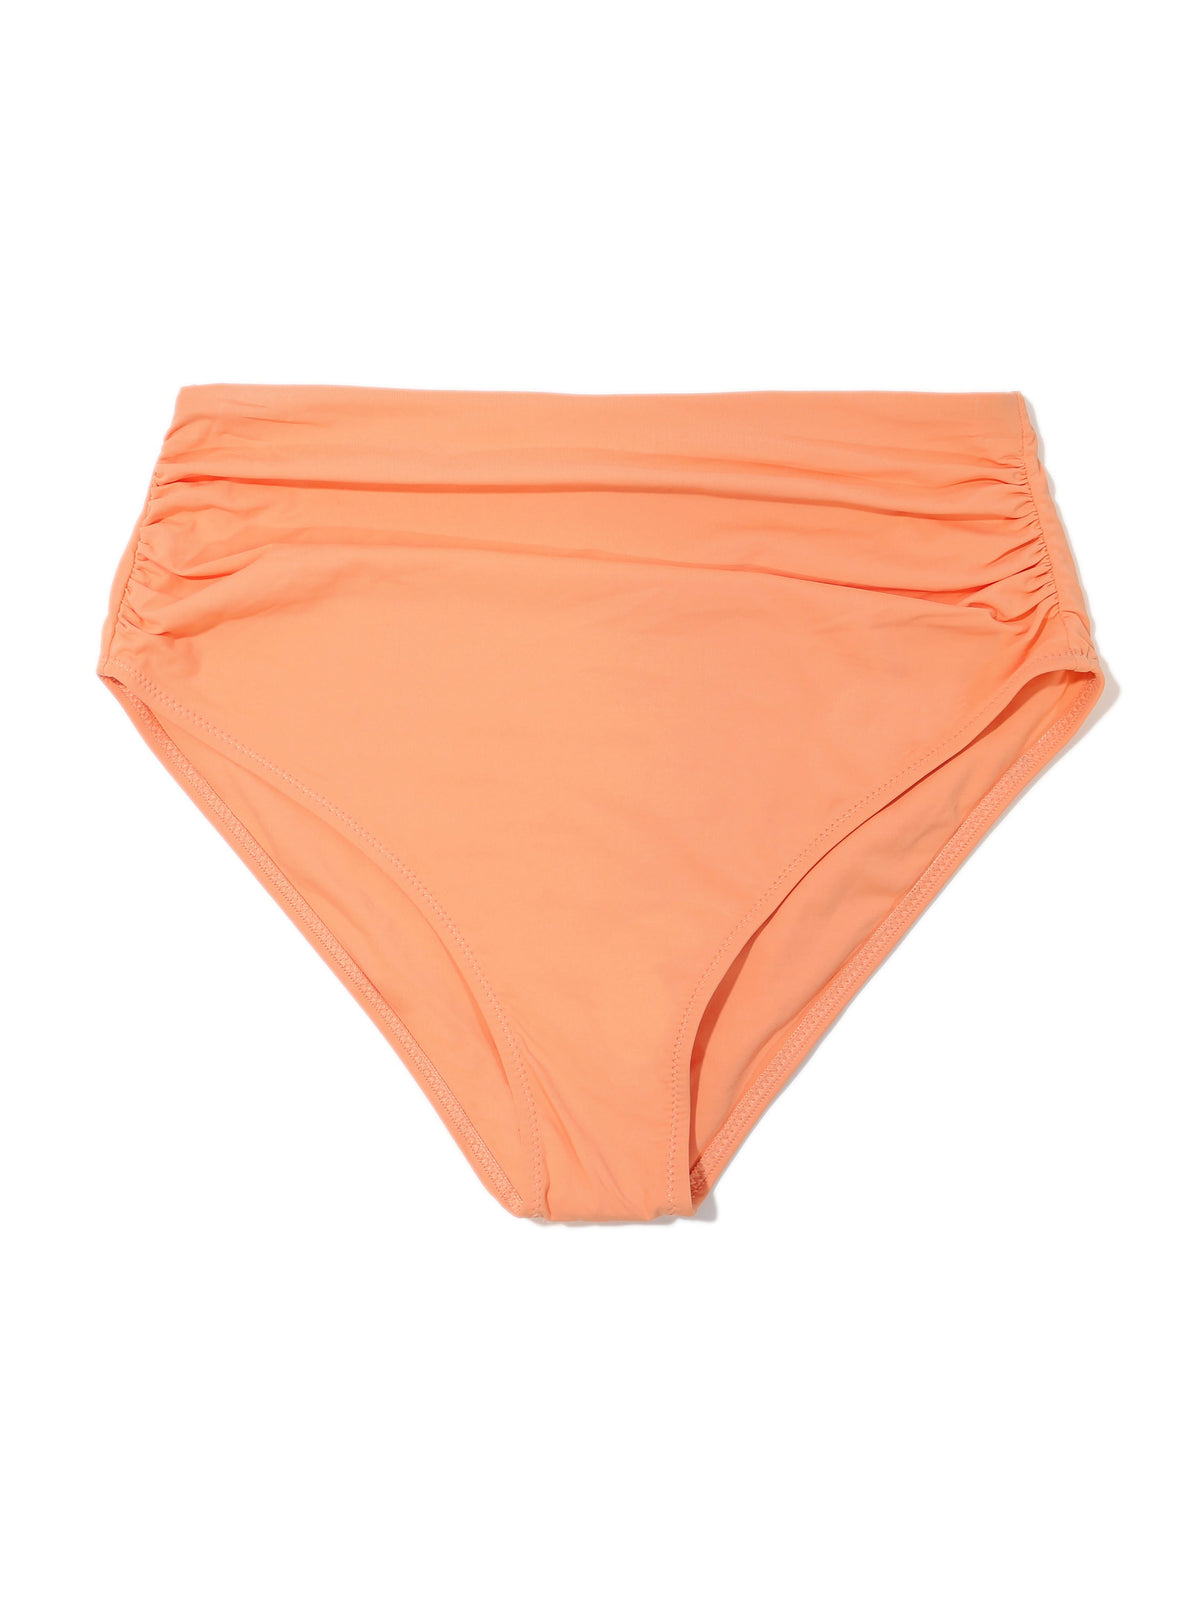 Women's Swimsuits - One Pieces, Bikinis & Swimwear | Hanky Panky